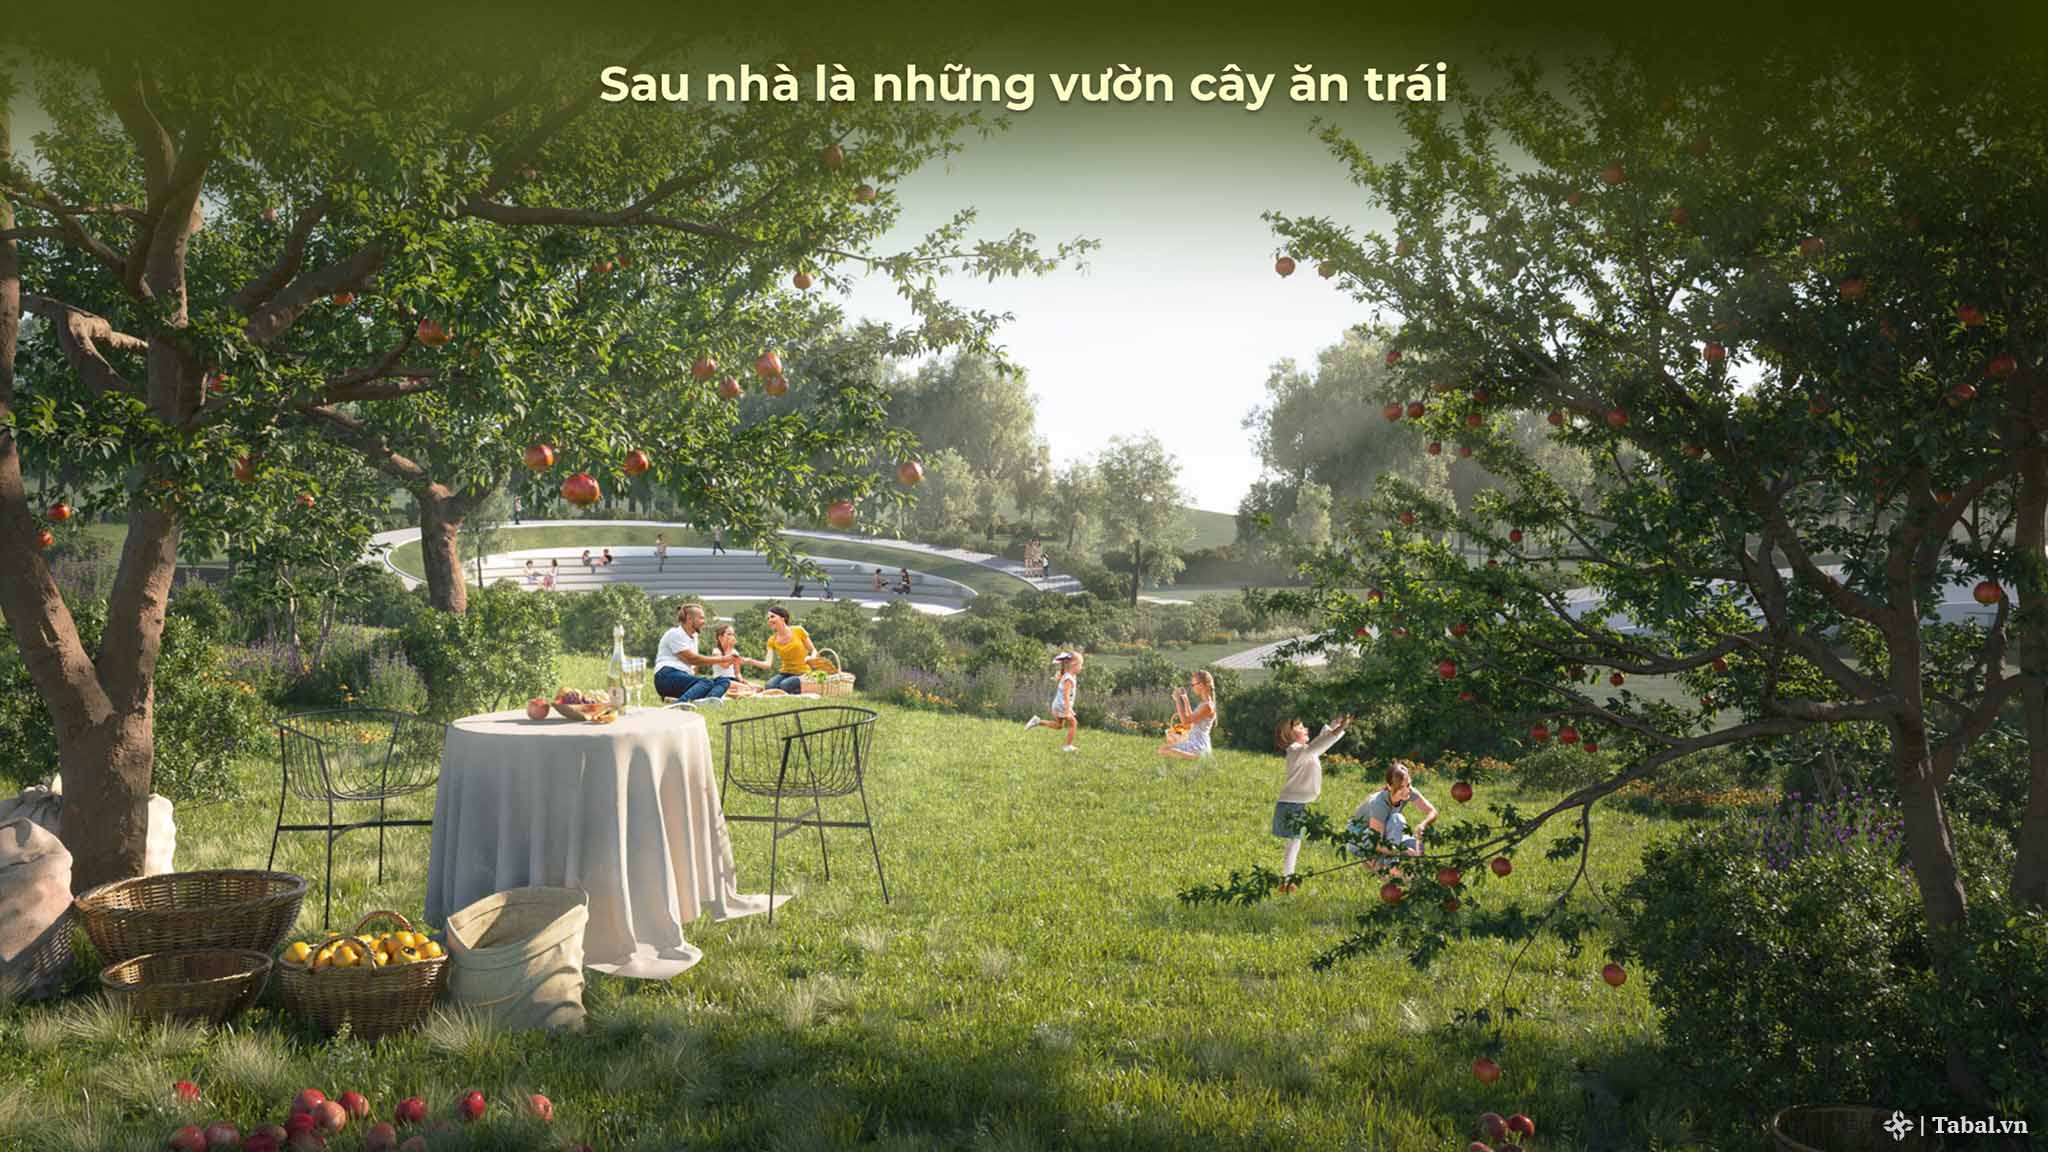 Dự án Ecovillage Saigon River - Ecopark Nhơn Trạch